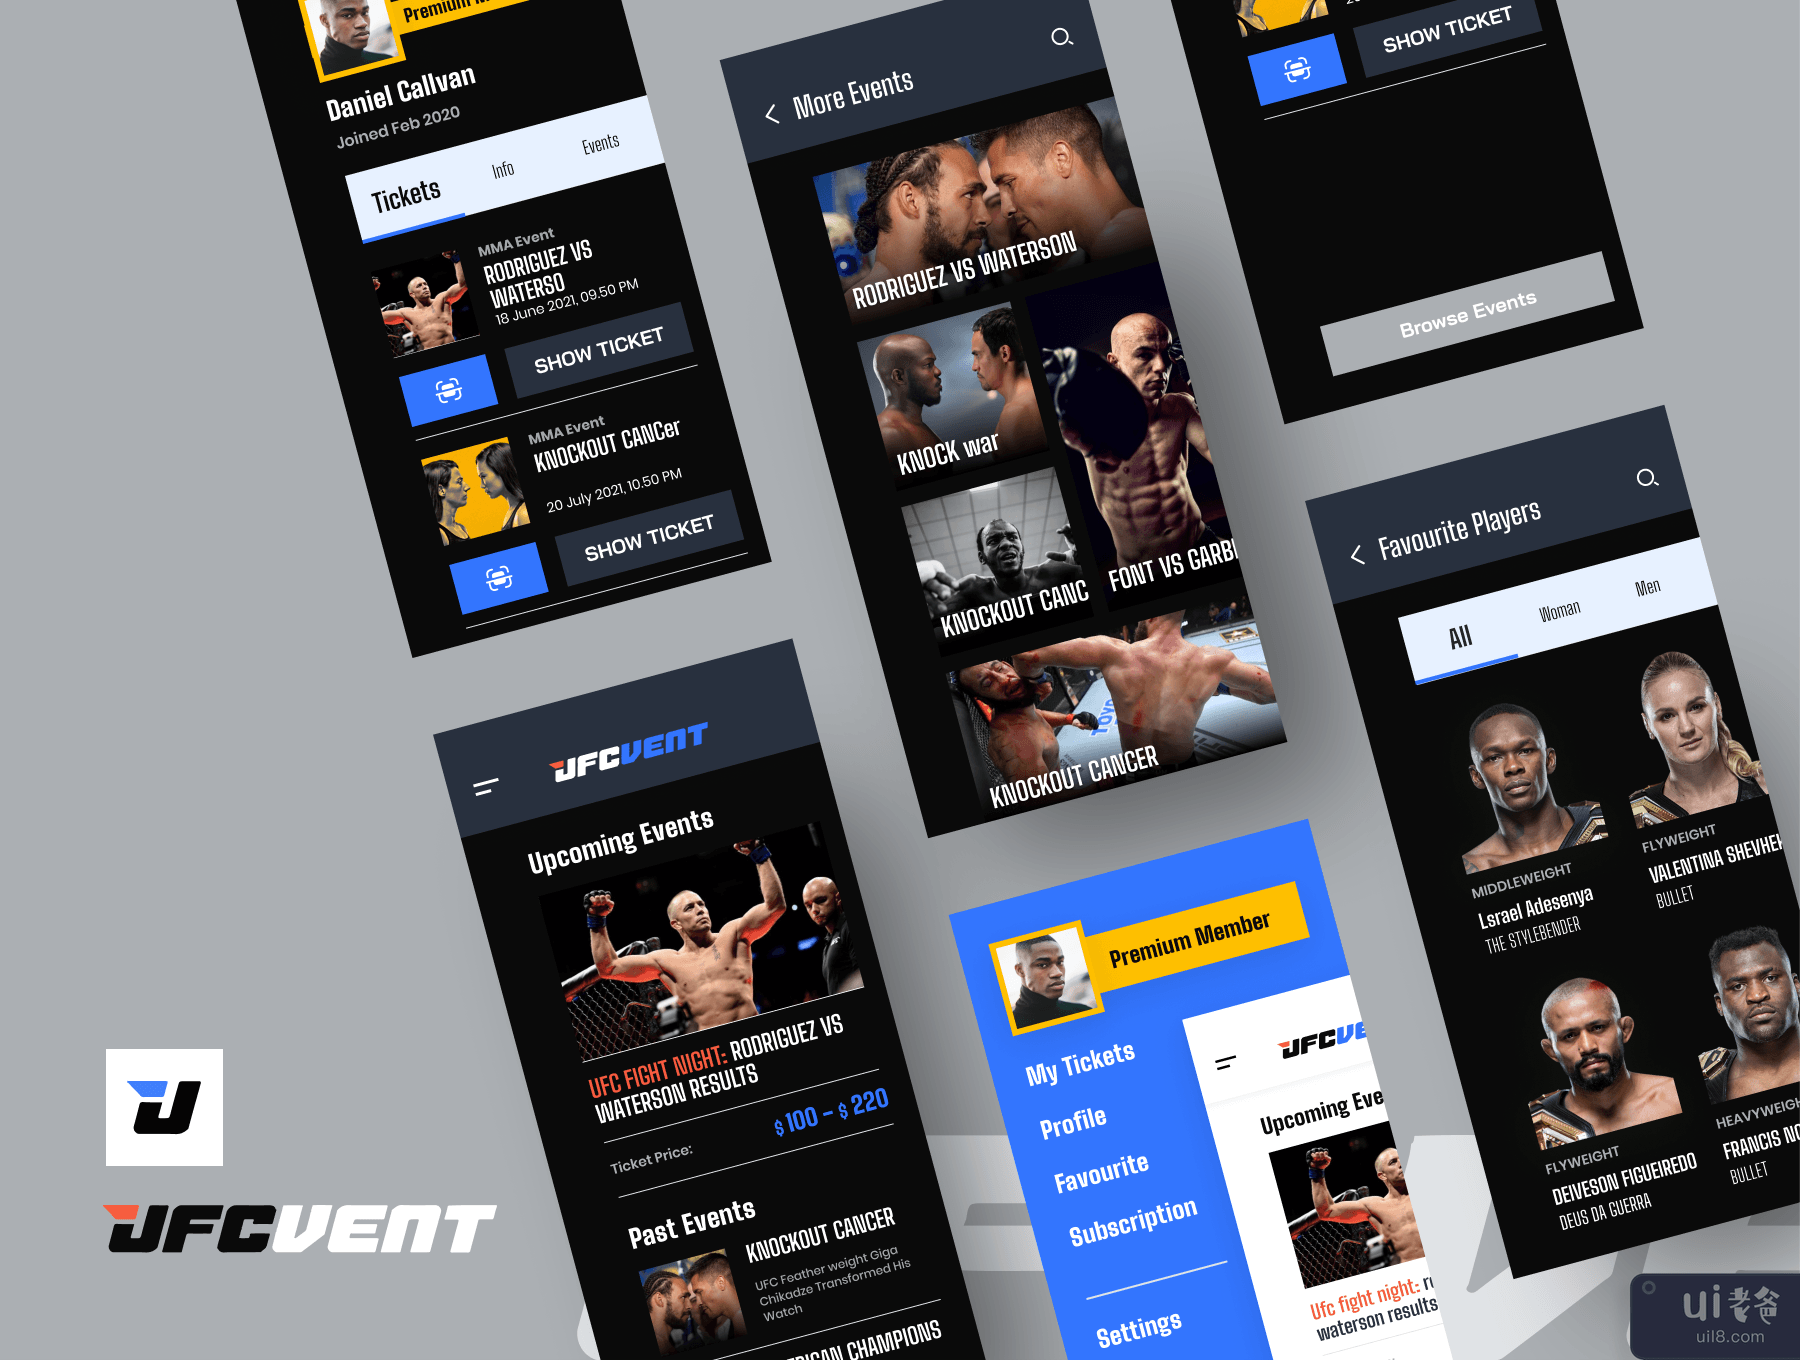 UFC VENT - MMA 赛事预订 40+ 屏幕(UFC VENT - MMA Event Booking 40+ Screens)插图3